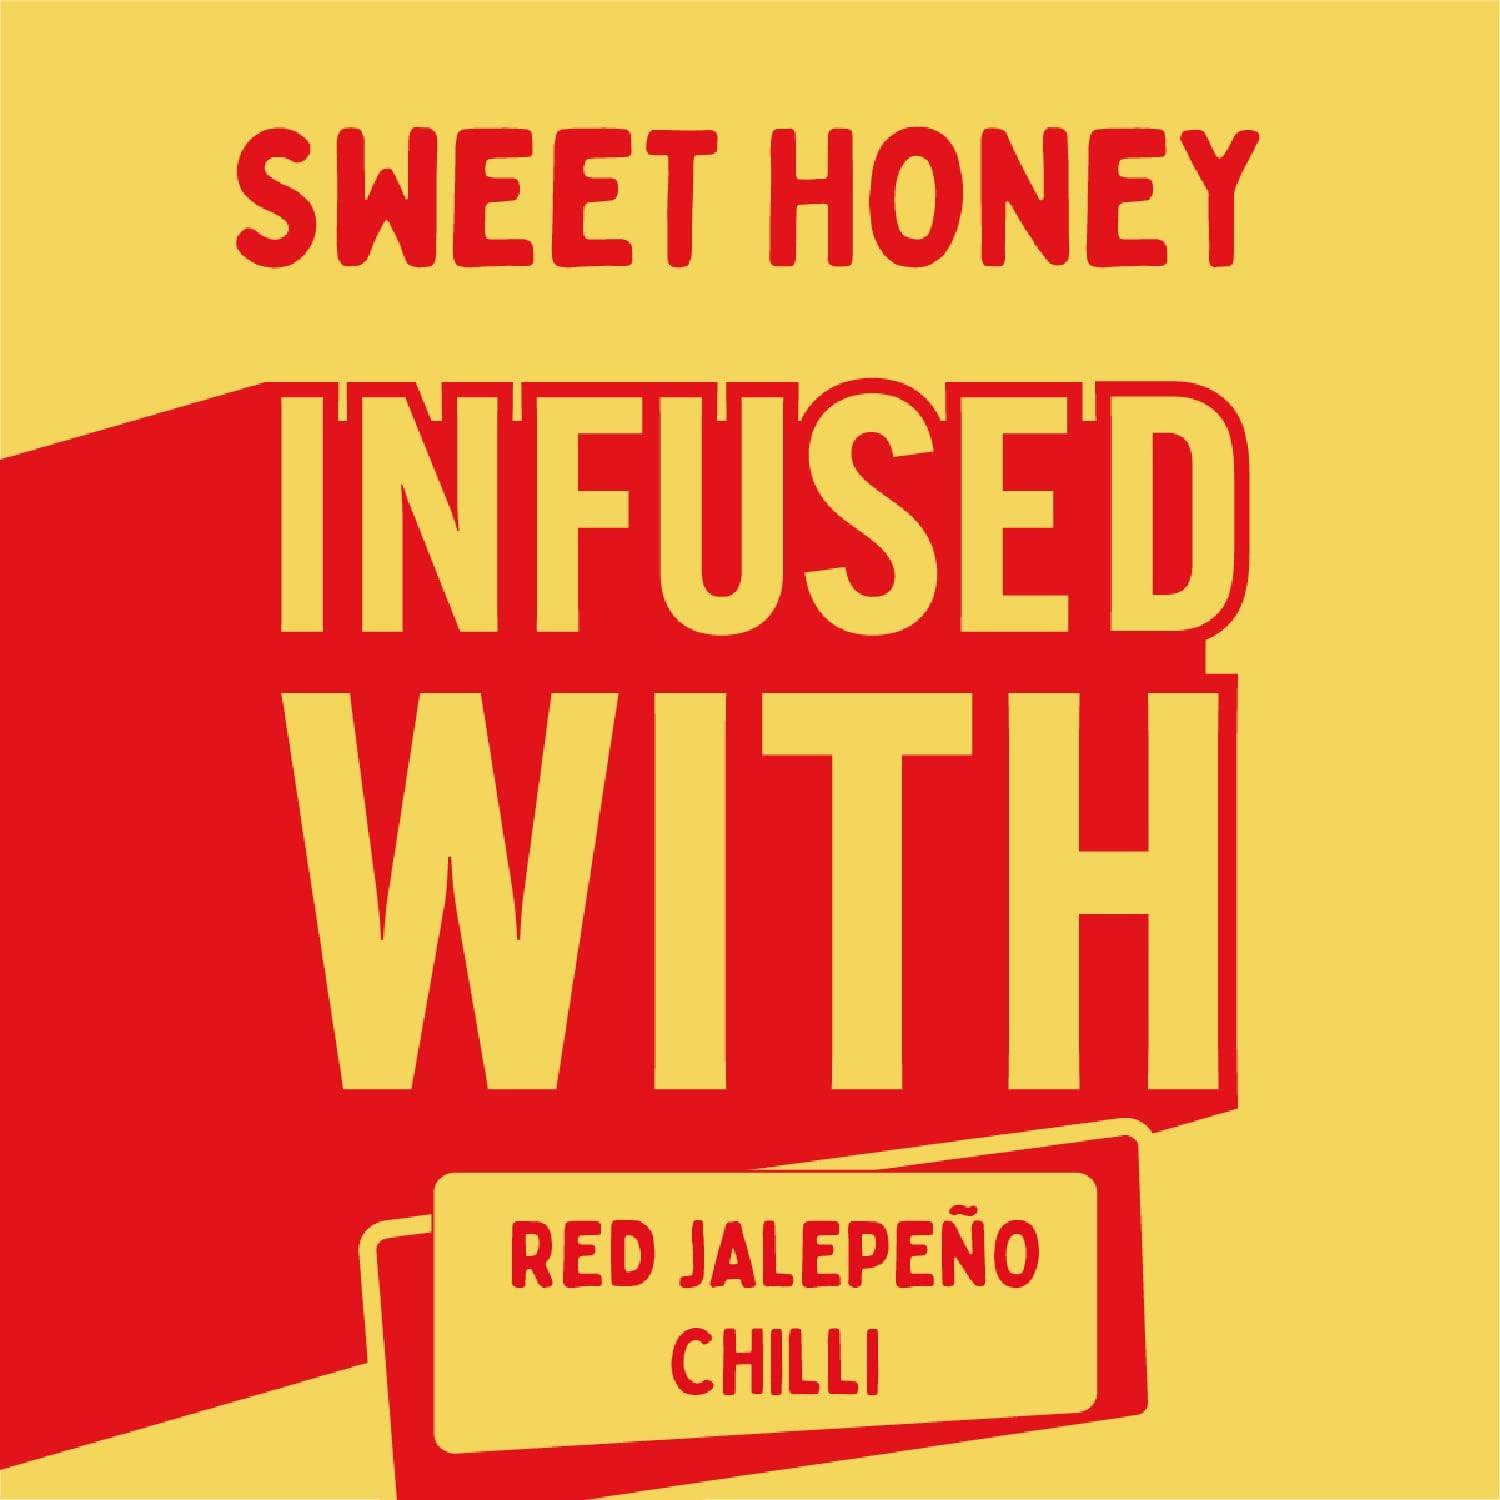 Original Hot Honey | 350g | JD's Hot Honey | Jalapeno Infused - One Stop Chilli Shop